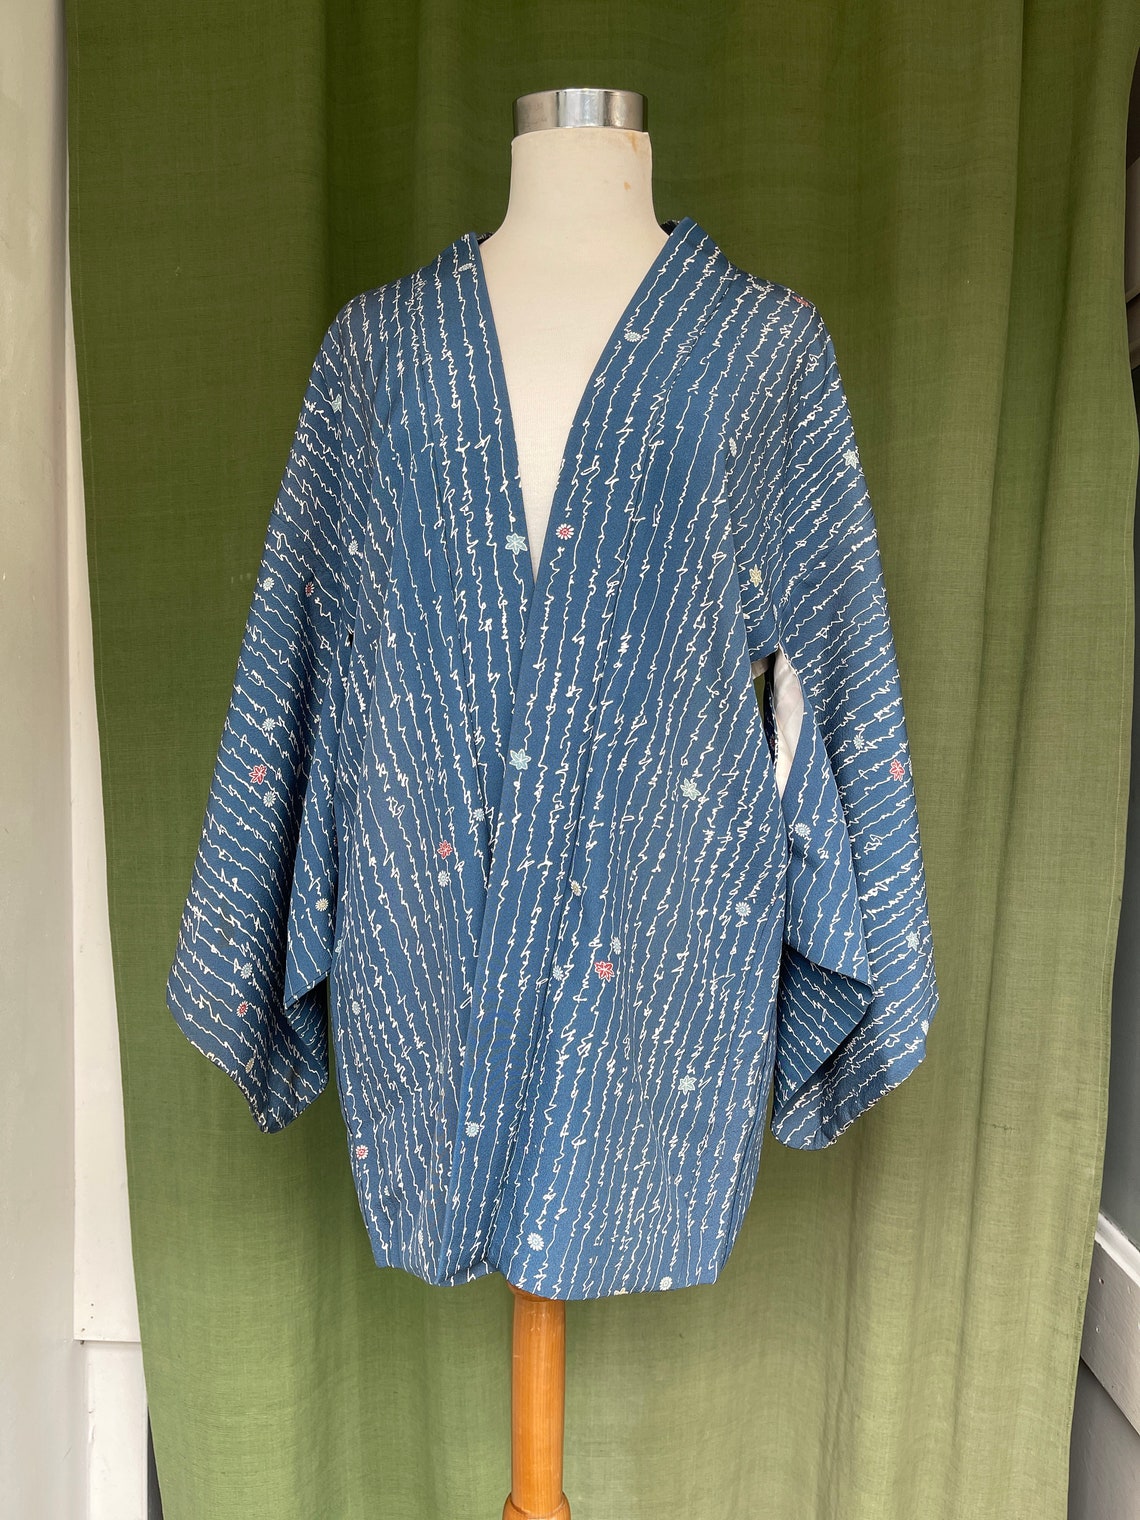 Blue Haori jacket Japanese Kimono | Etsy